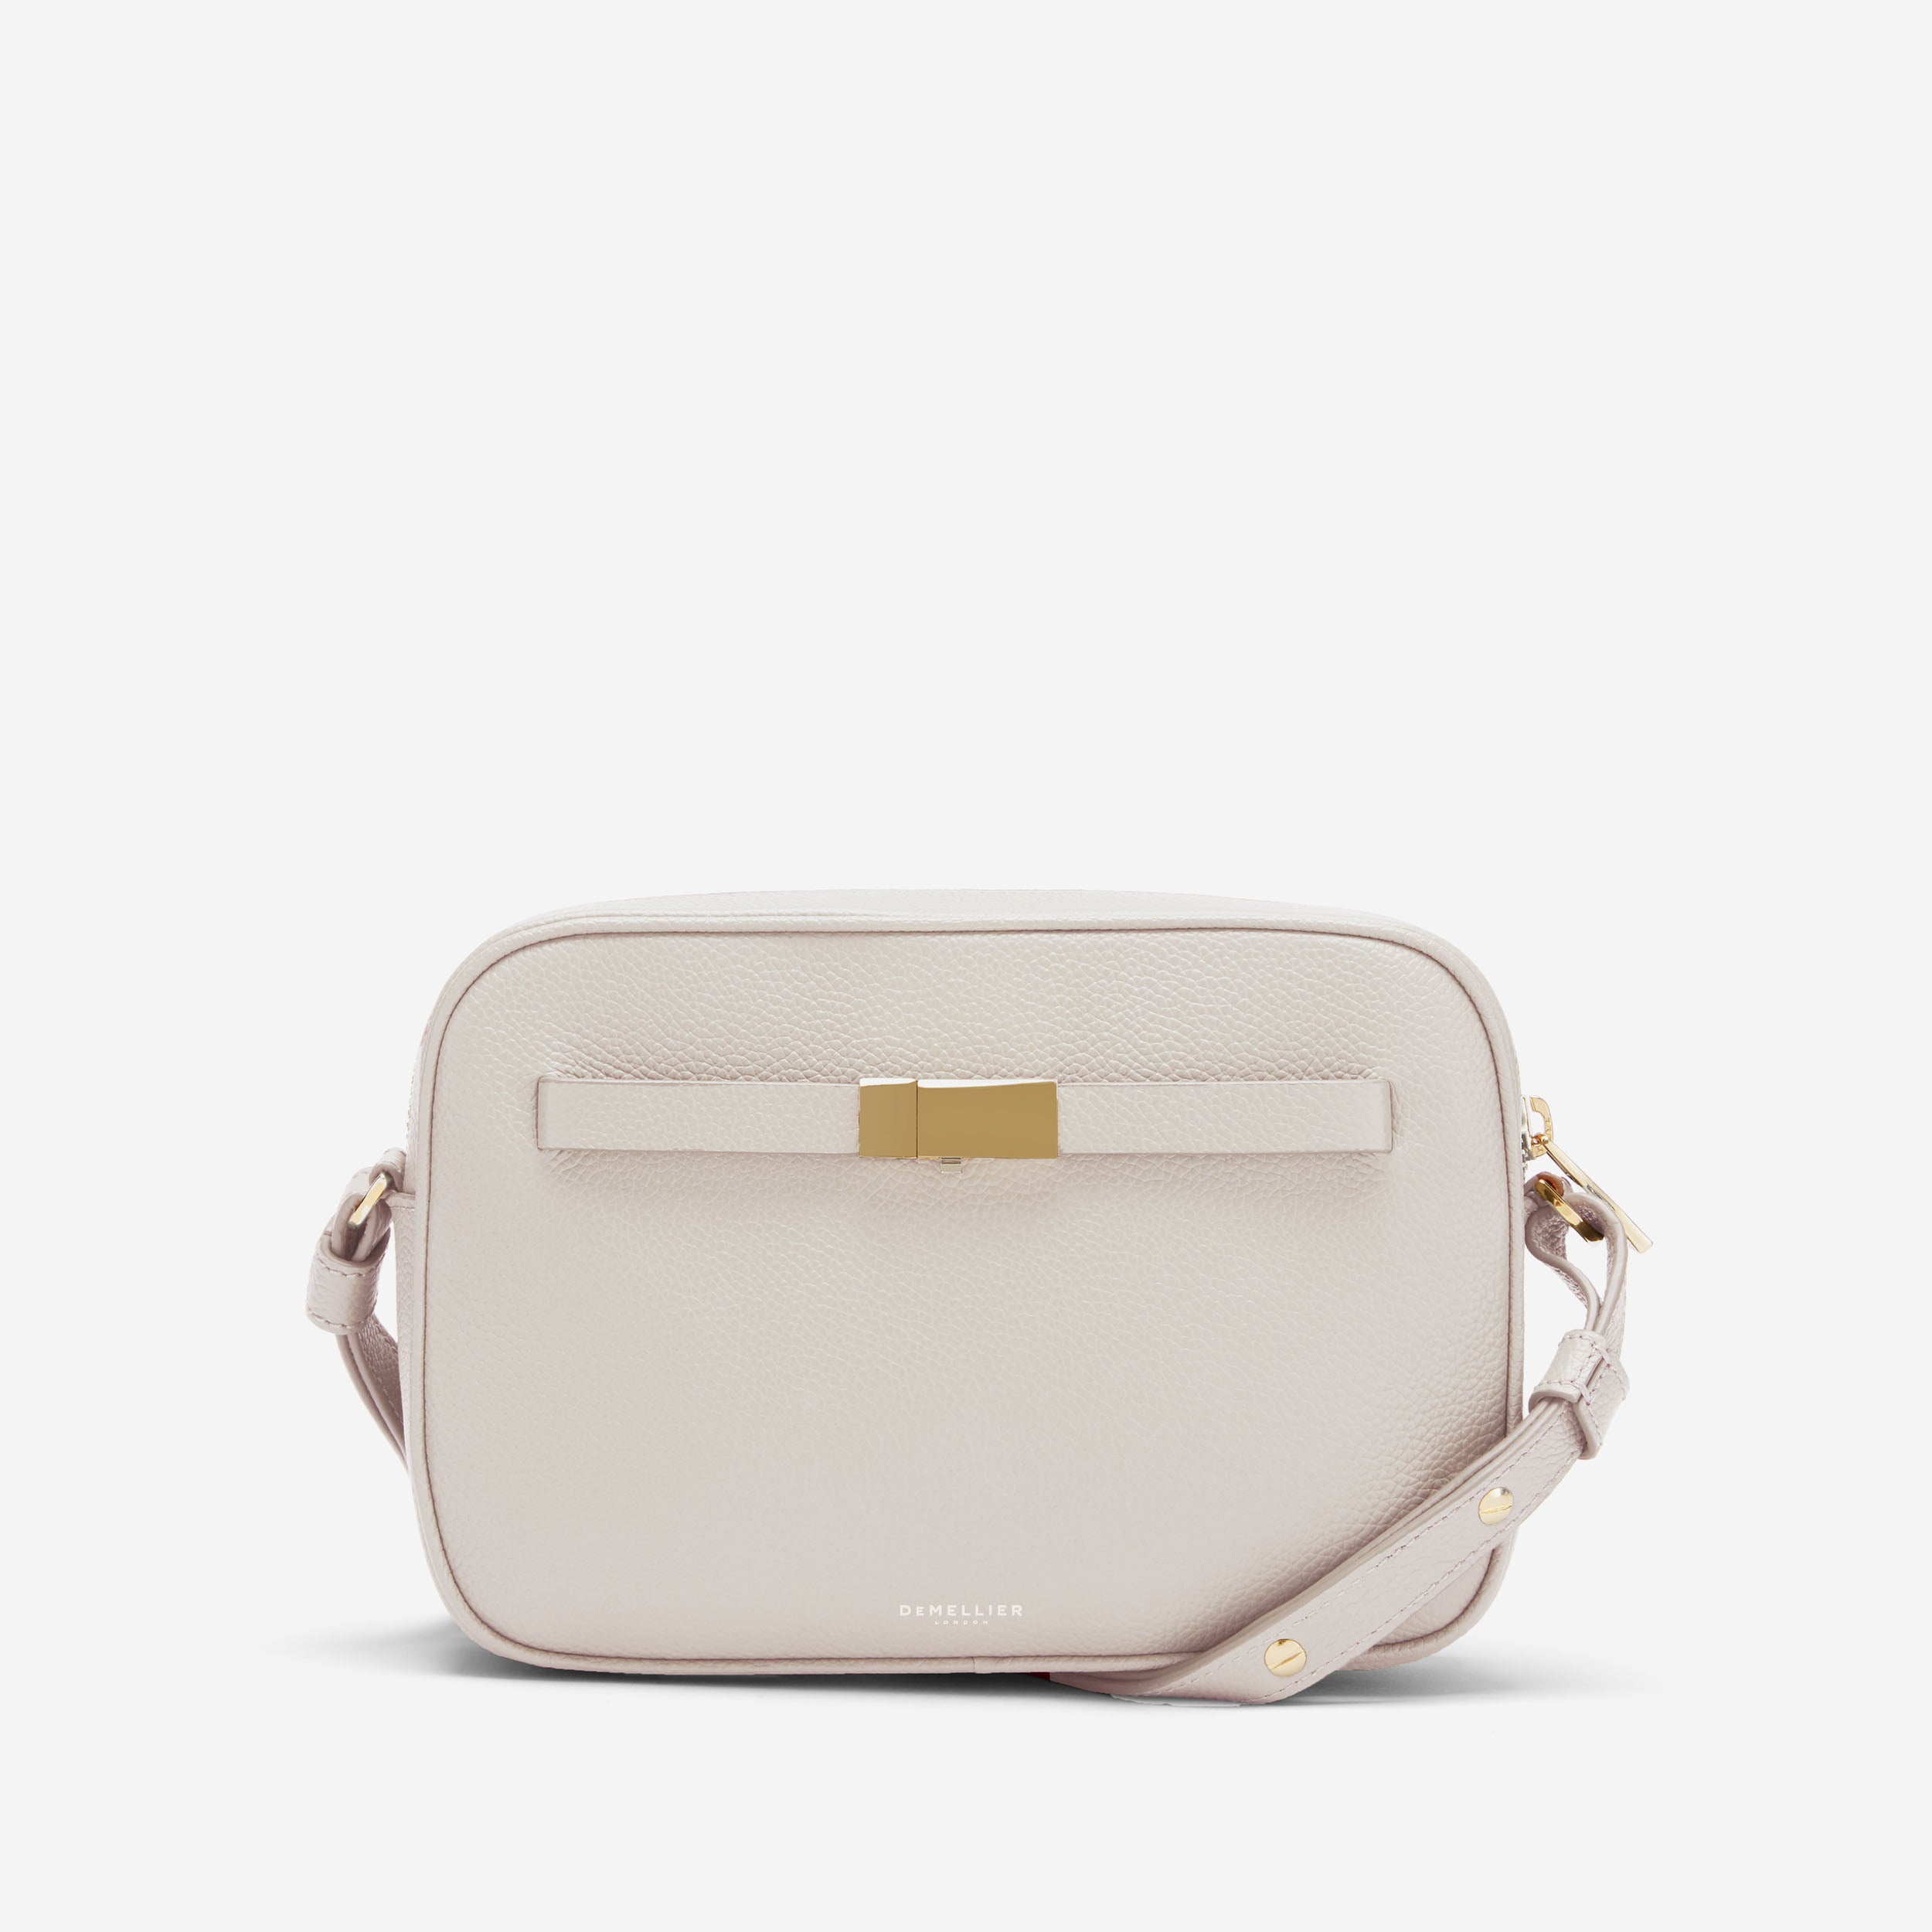 Louis Vuitton Padlock with Key No. 315 - I Love Handbags